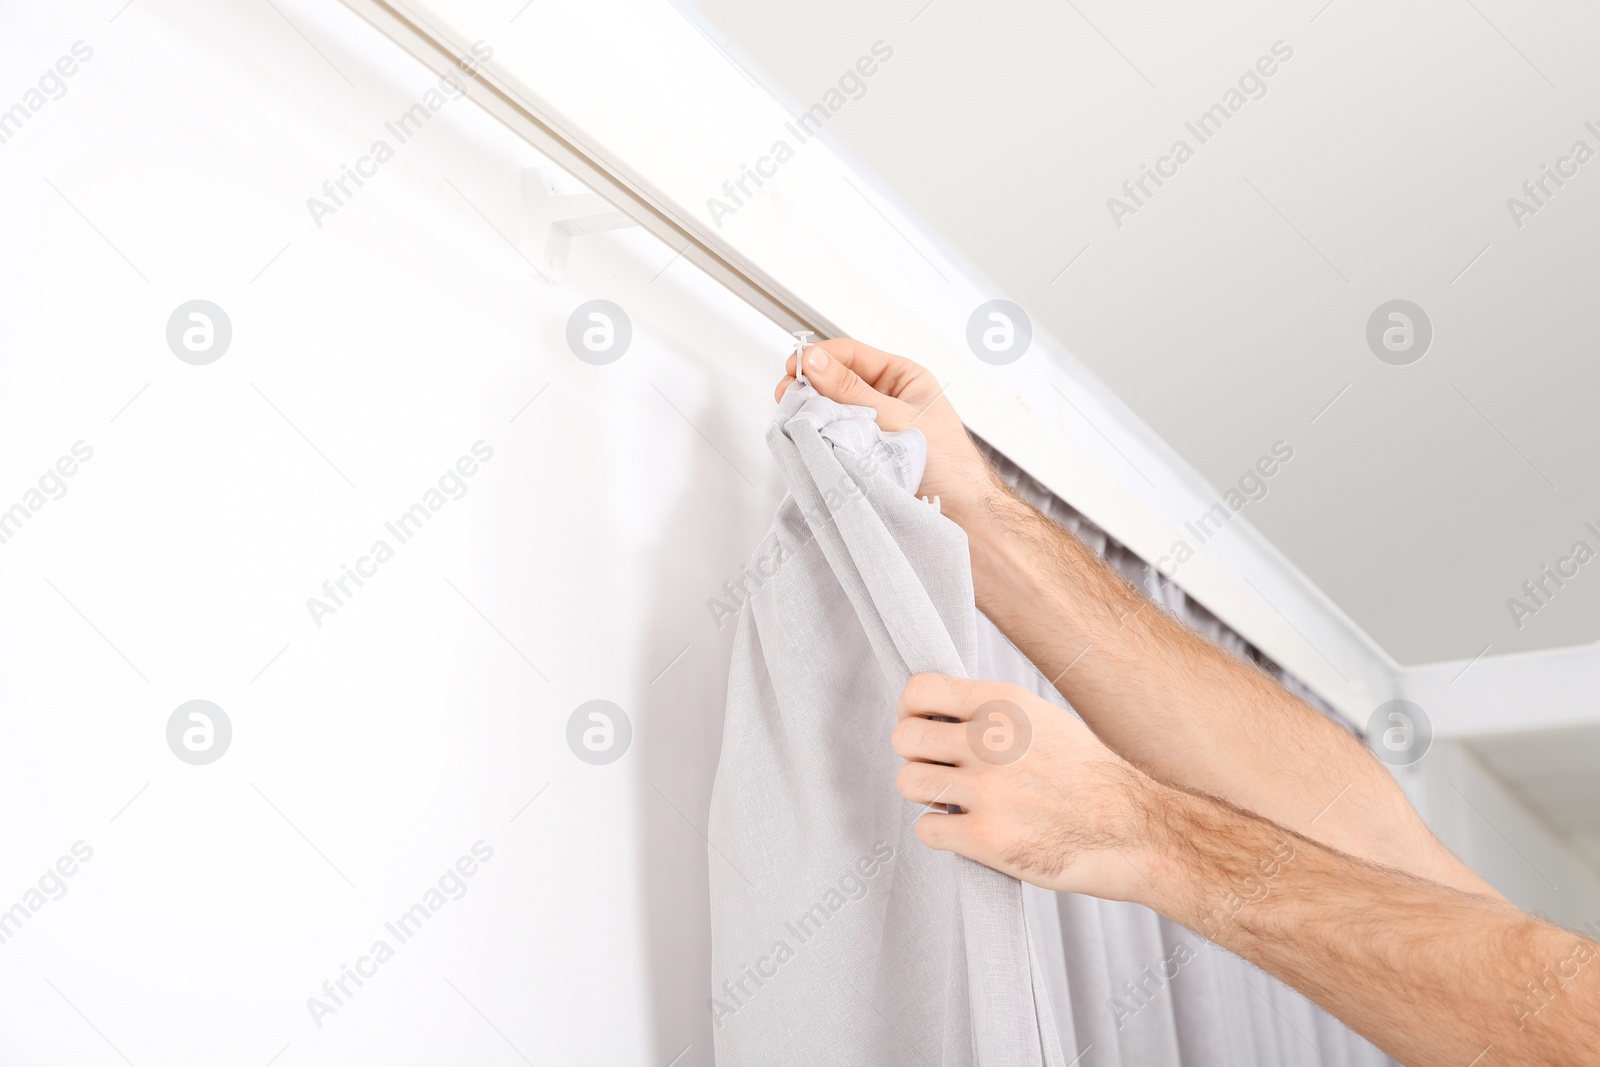 Photo of Man hanging window curtain indoors, closeup. Interior decor element